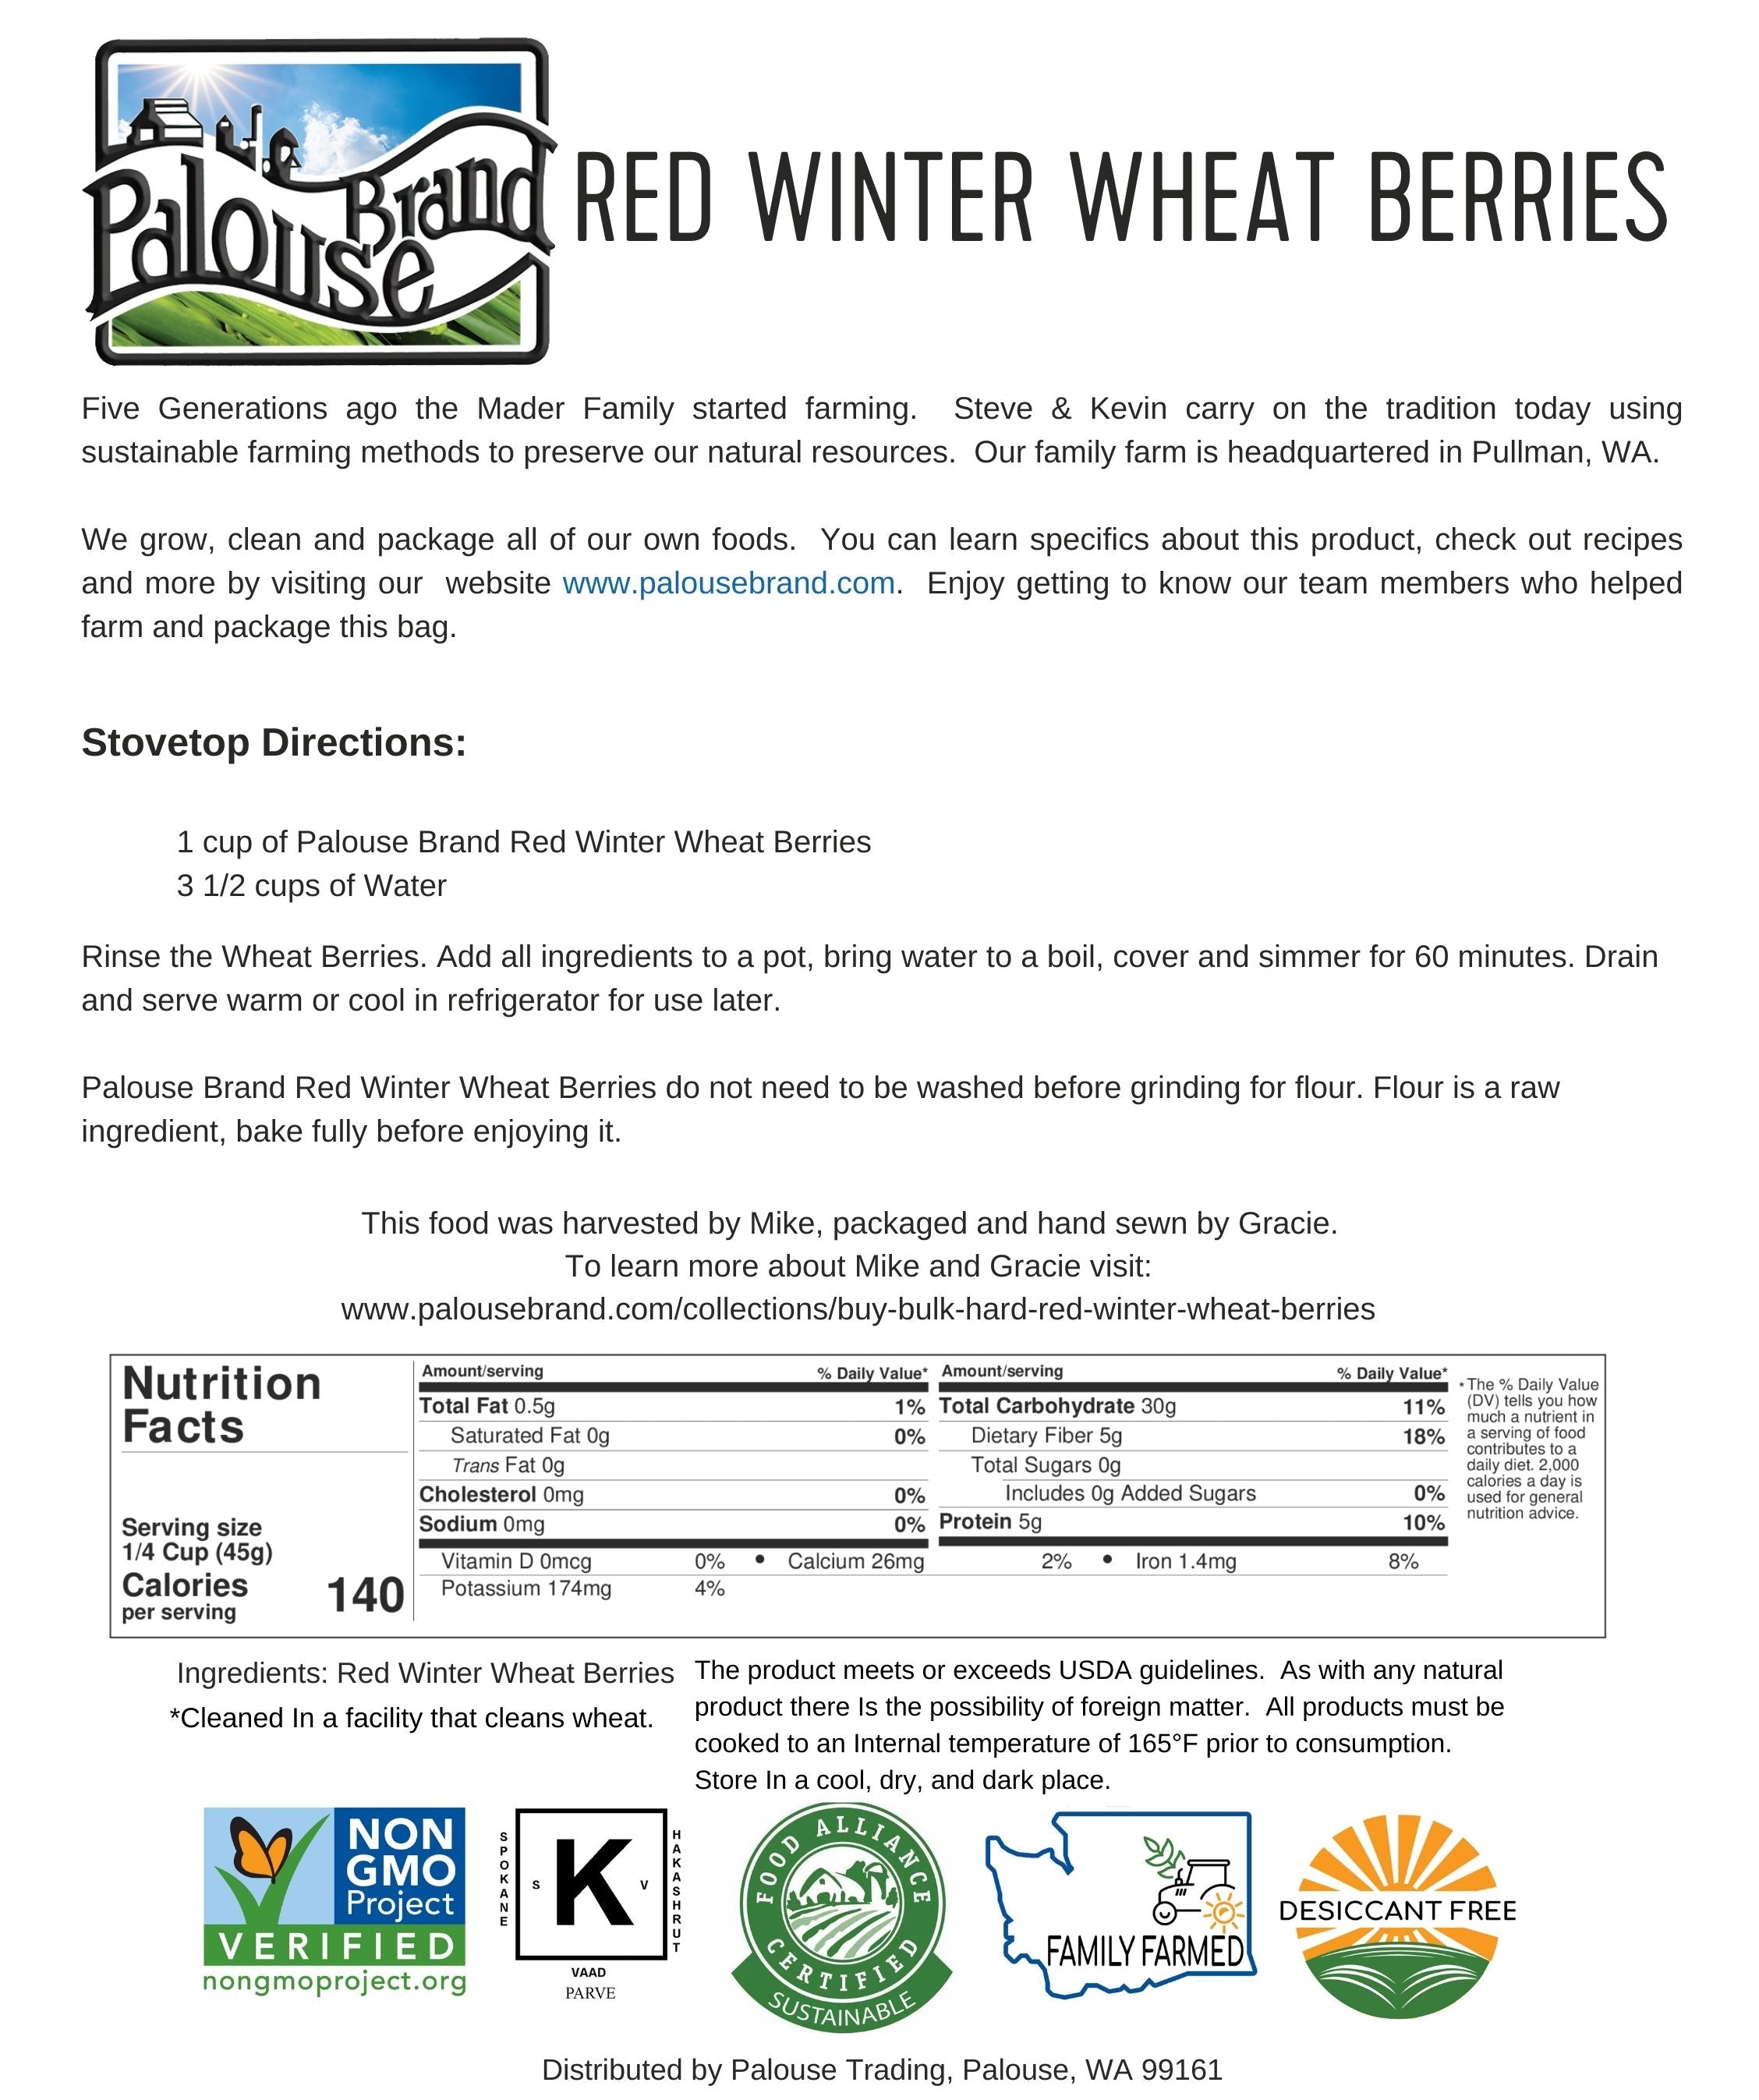 Hard Red Winter Wheat Bundle | 100 LB